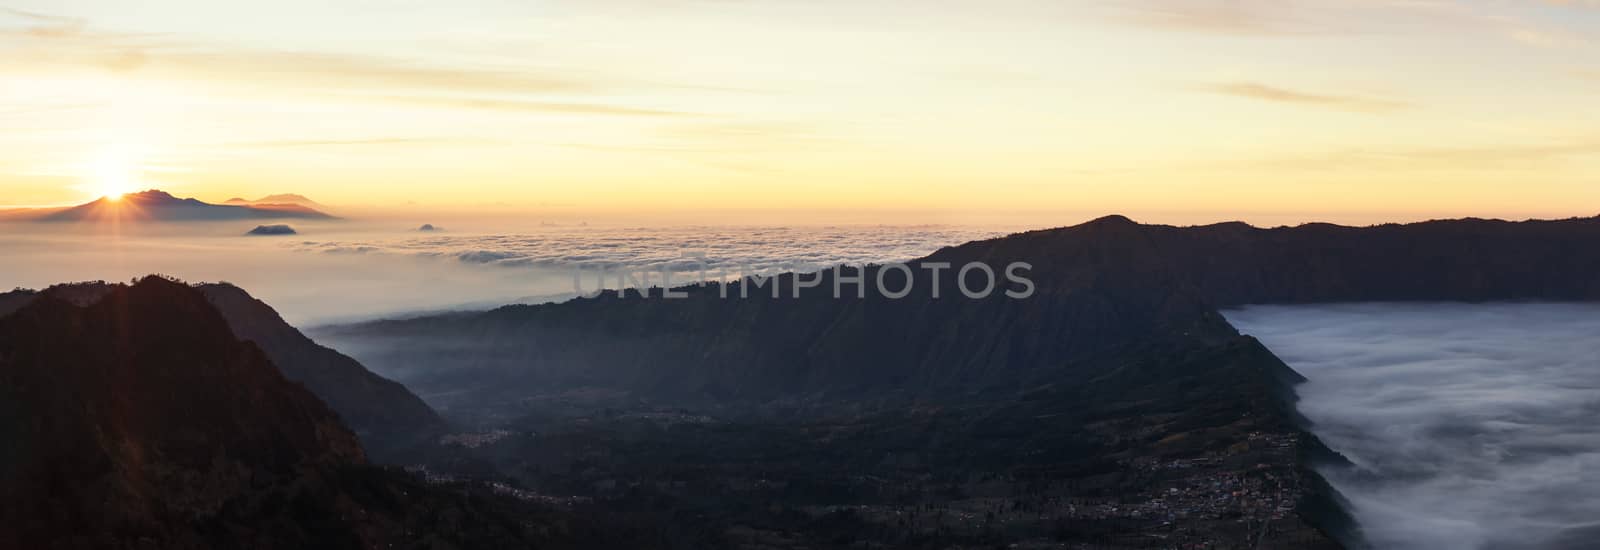 The sunrise of the Bromo volcano, Shot in Java, indunesia by vinkfan